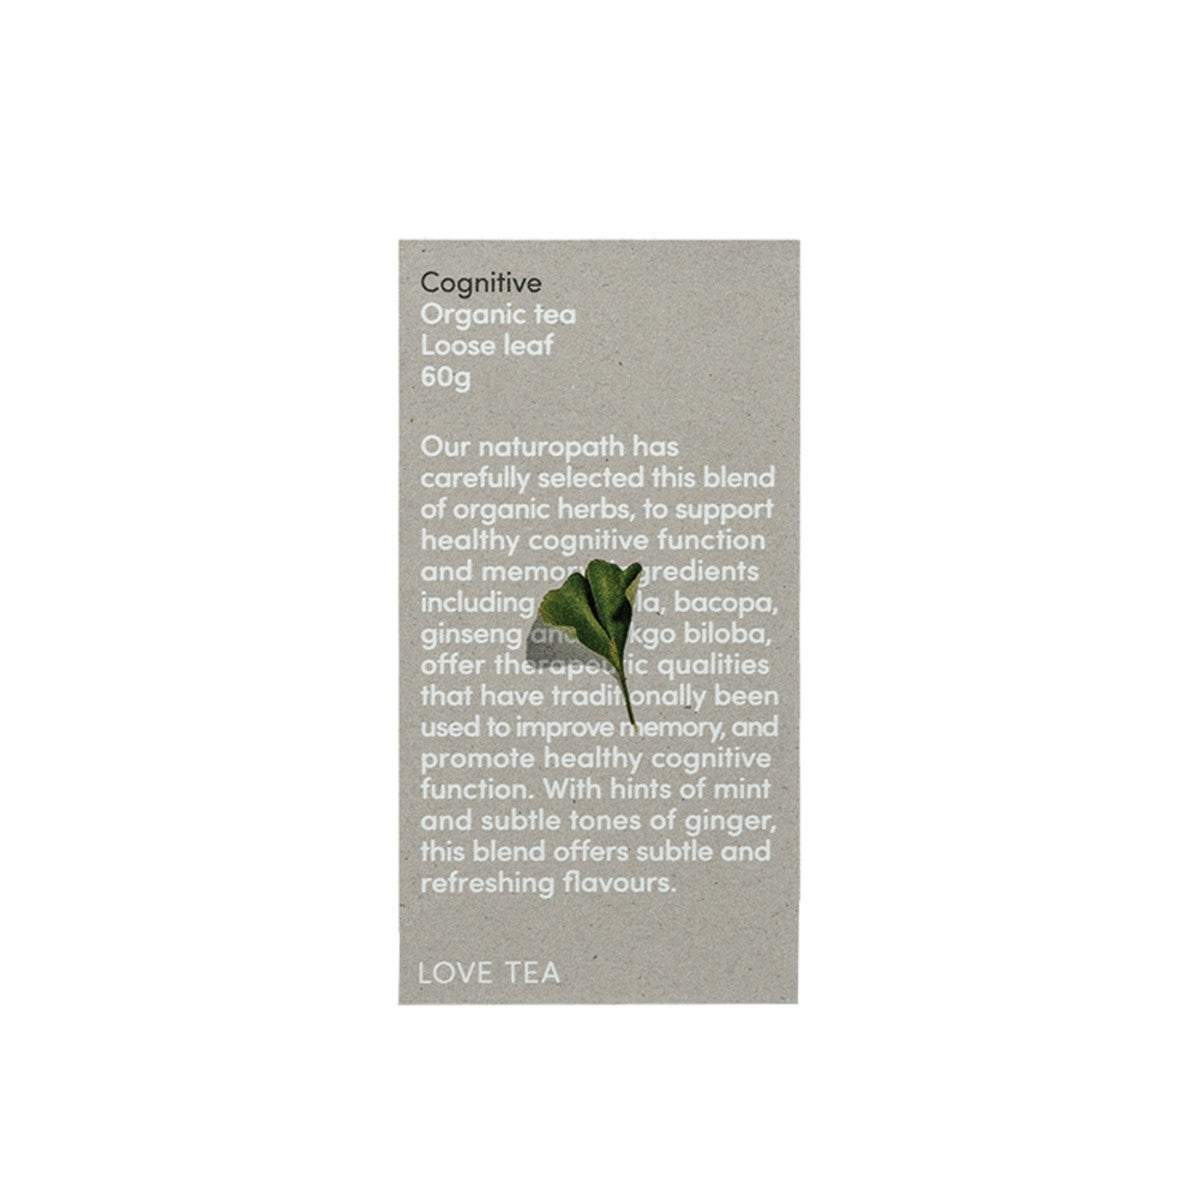 image of Love Tea Organic Cognitive Tea Loose Leaf 60g on white background 